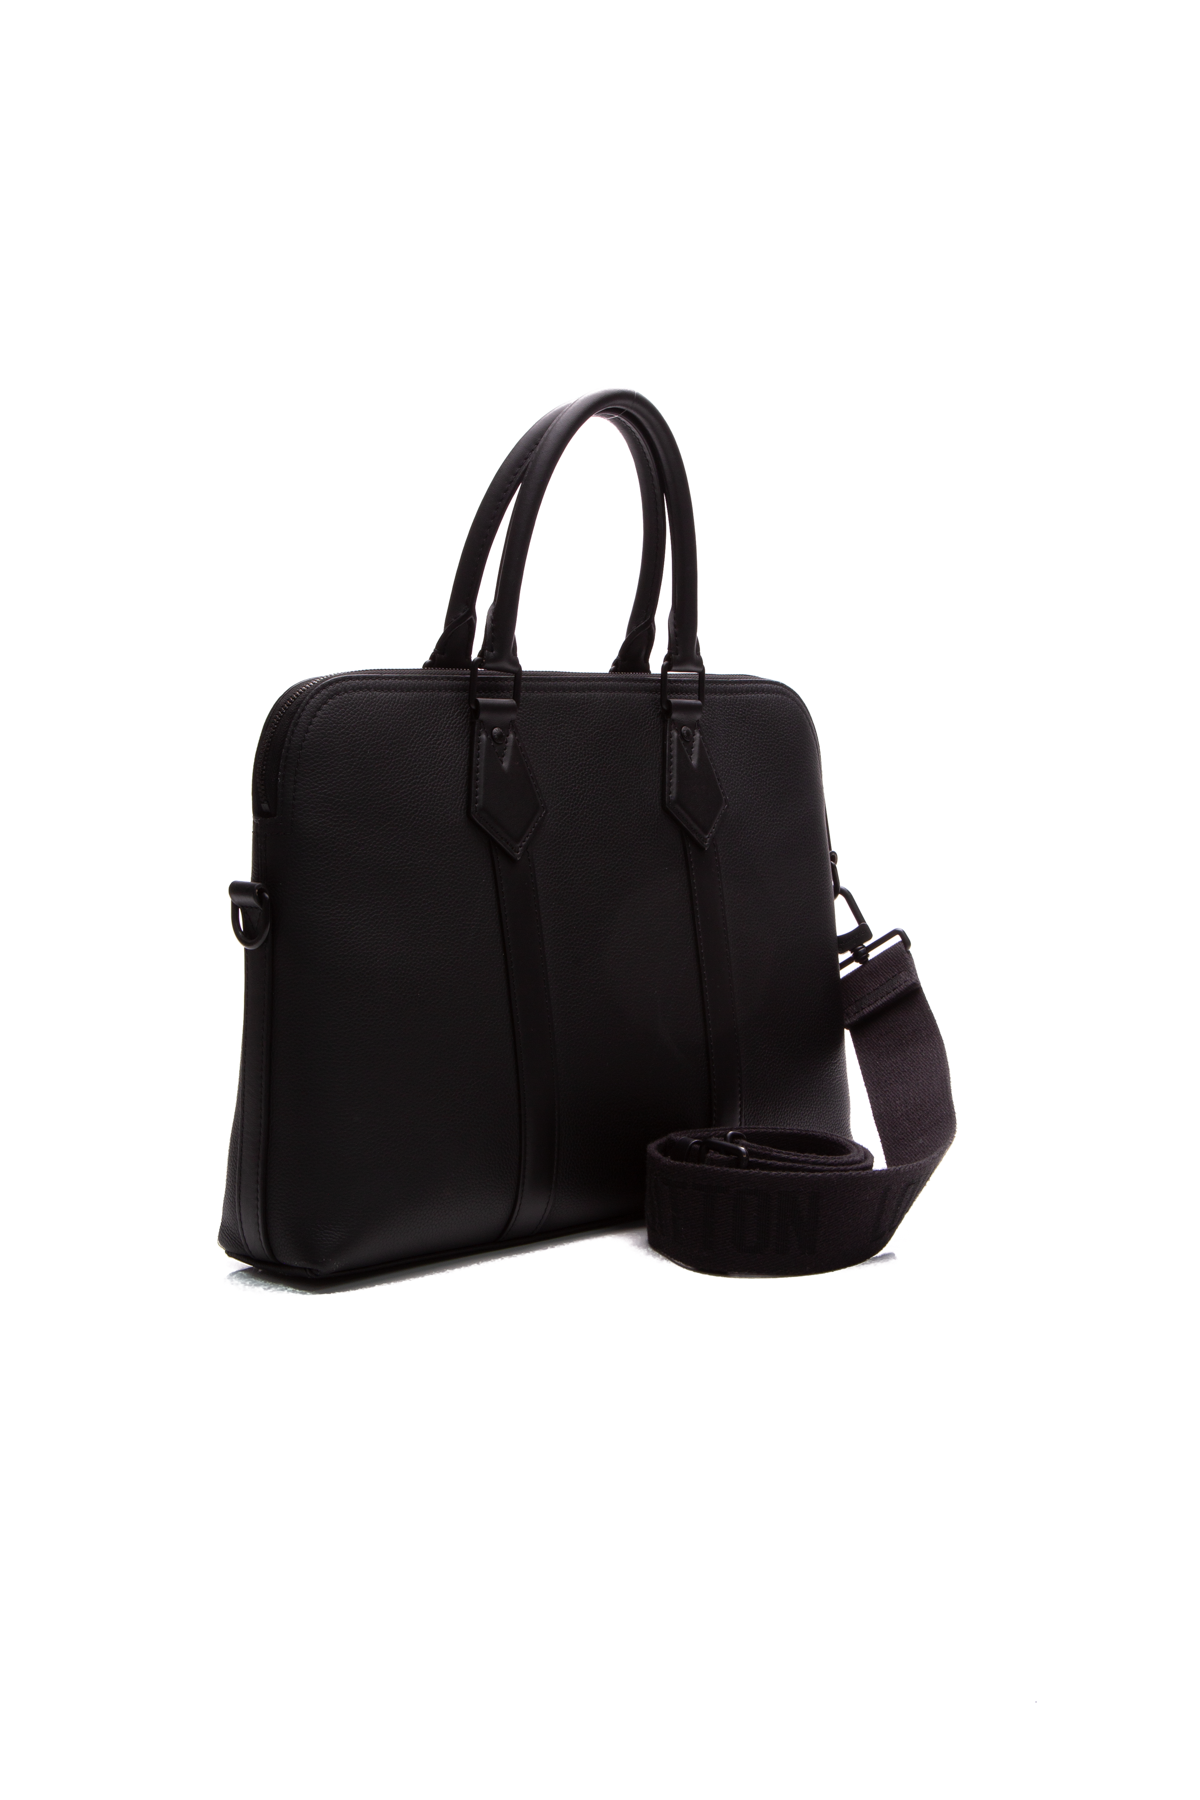 Lot - Louis Vuitton attache case with soft leather file case.